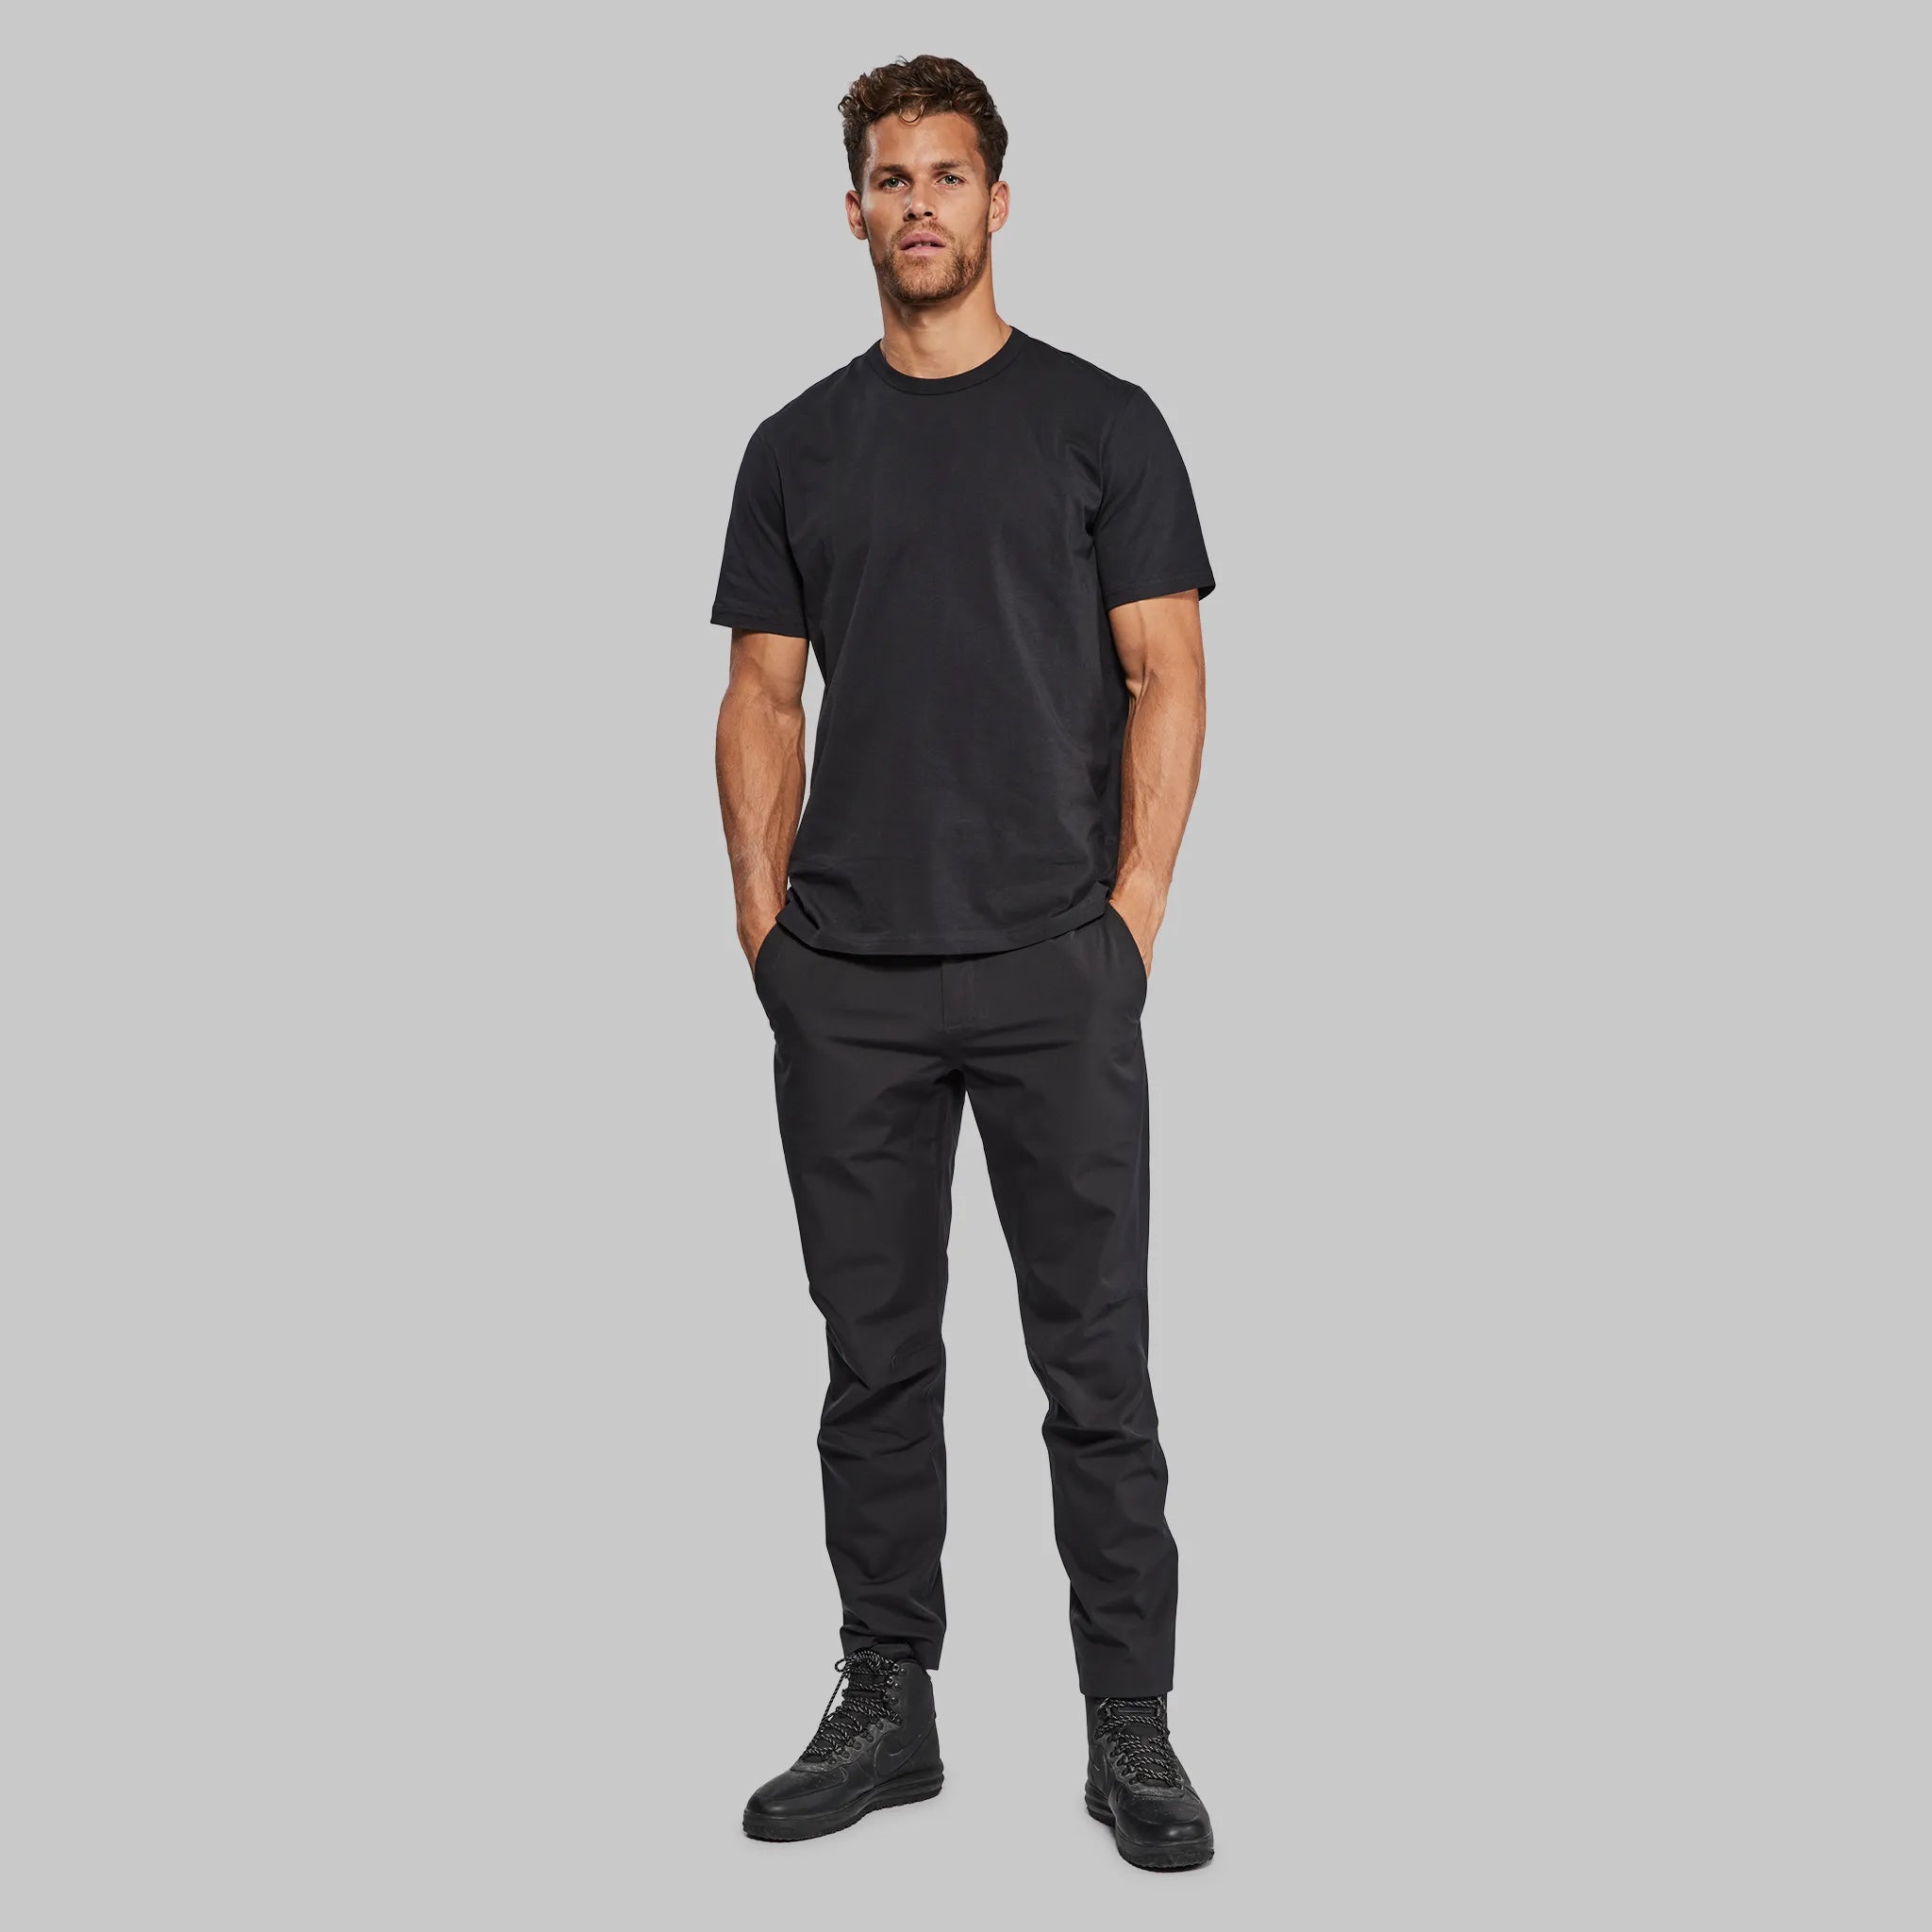 ADPT oversized box fit T-shirt in black | ASOS